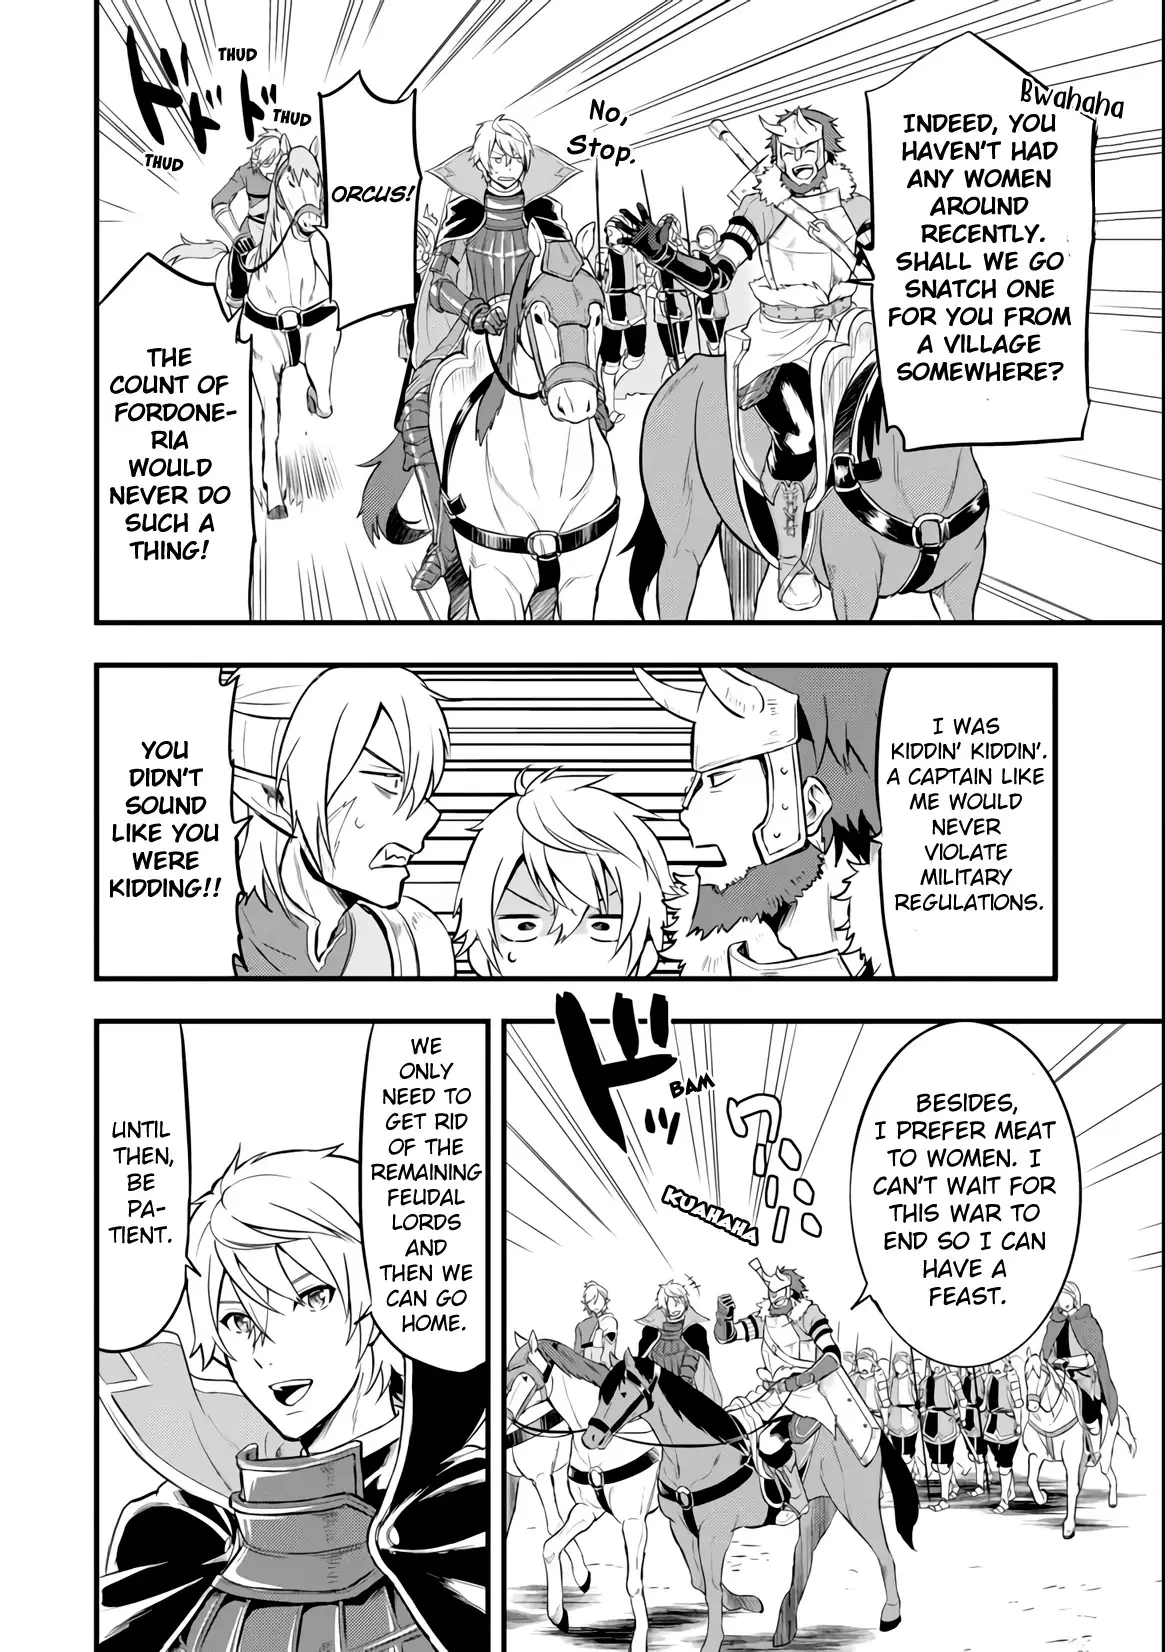 Mysterious Job Called Oda Nobunaga - 13 page 2-2c77e6b6